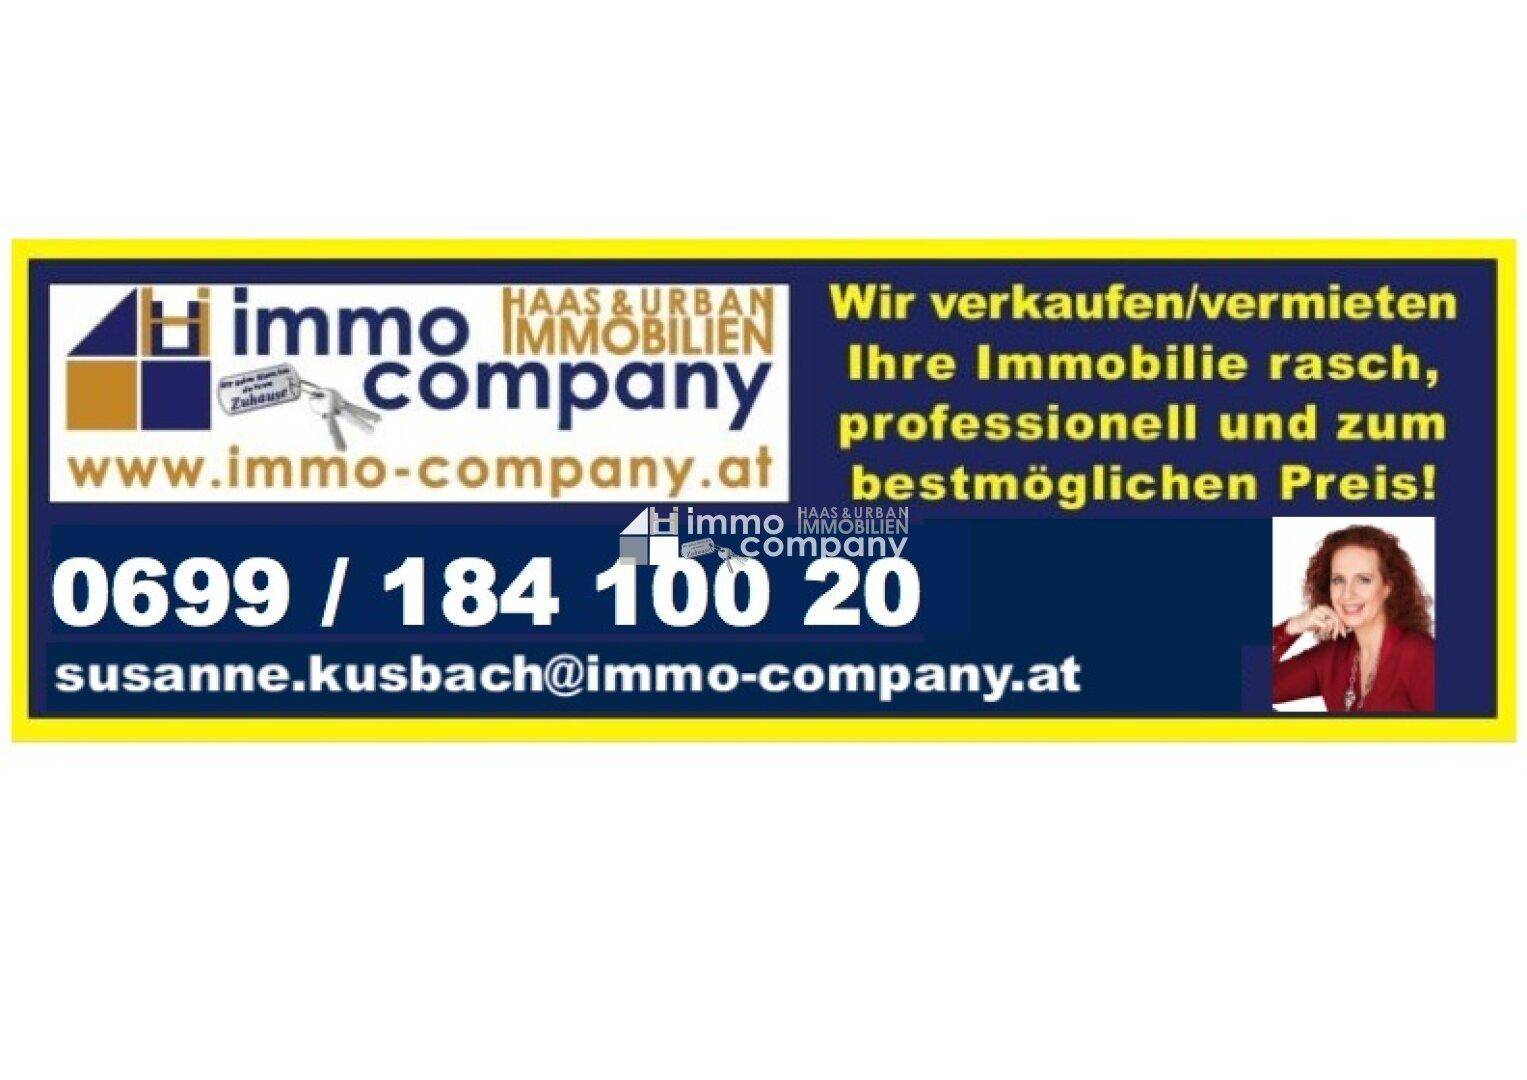 Immo-Company